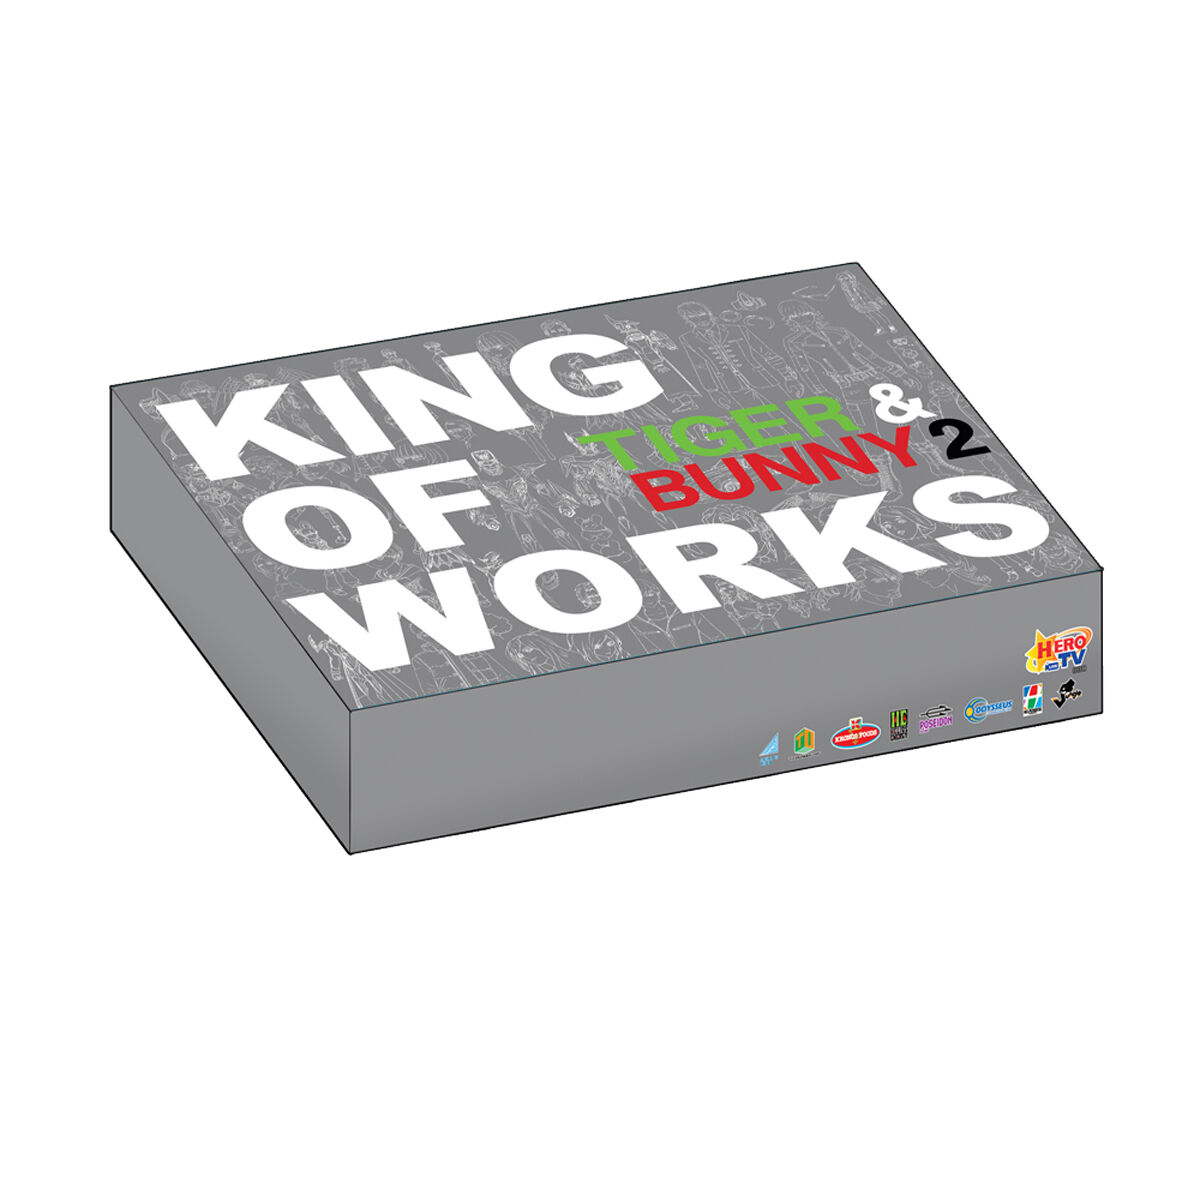 TIGER\u0026BUNNY KING OF WORKS (設定資料集アートワーク) - アート